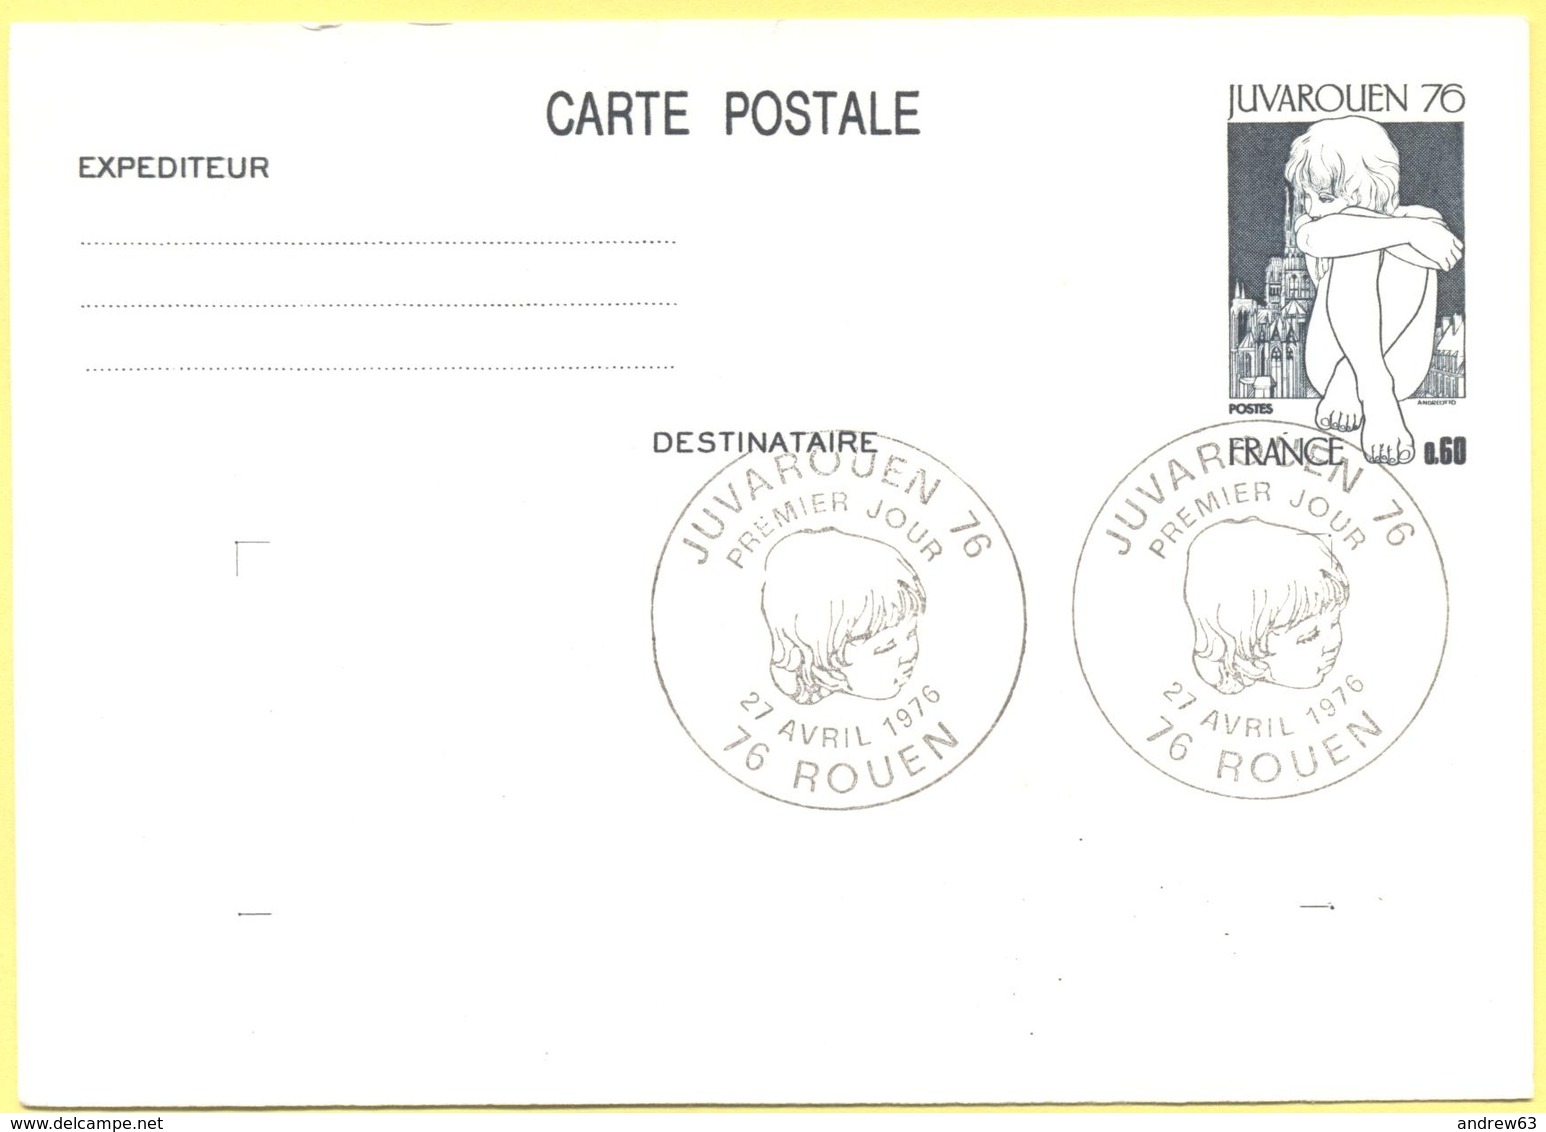 FRANCIA - France - 1976 - Juvarouen 76 - Carte Postale - Intero Postale - Entier Postal - Postal Stationery - Rouen -FDC - 1970-1979